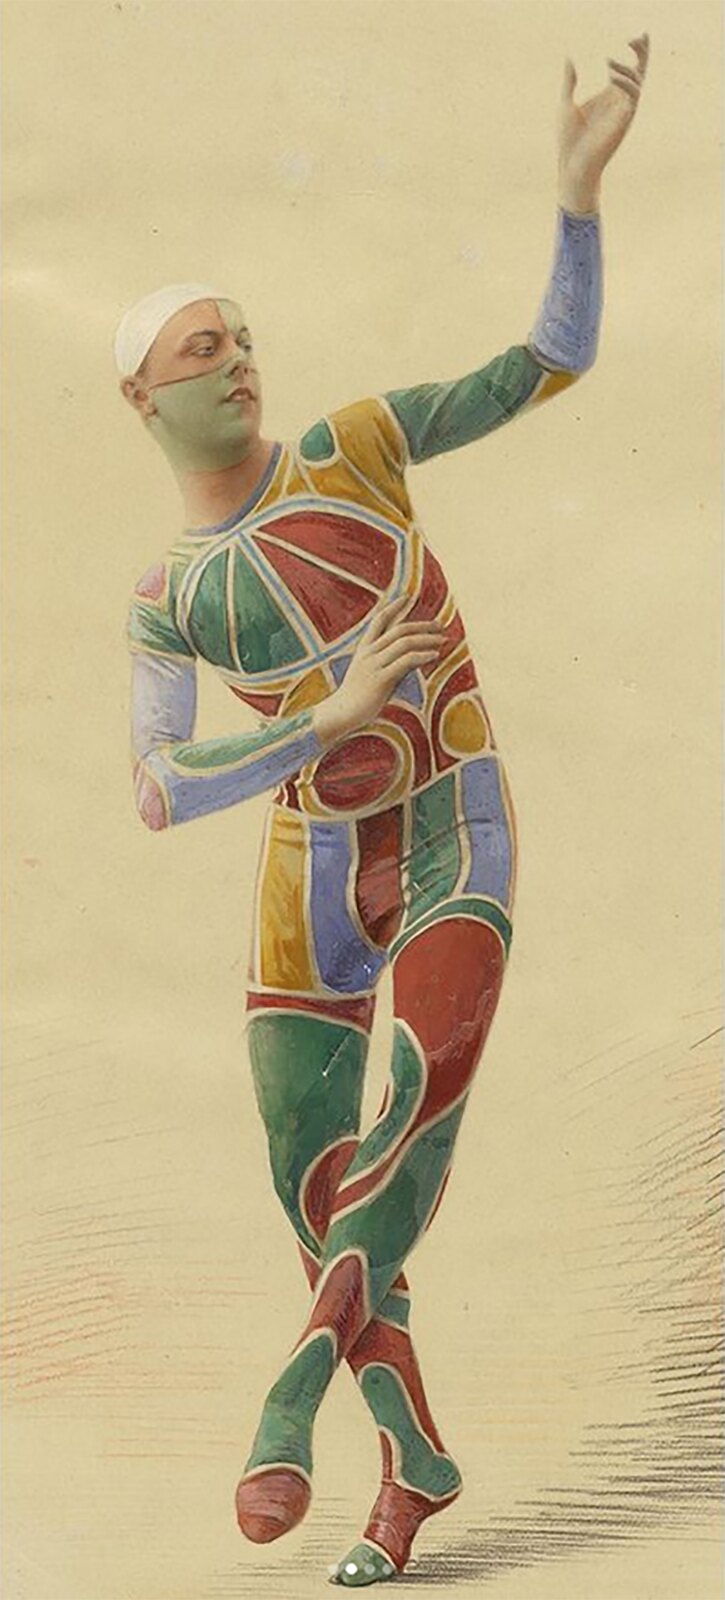 Jean Börlin in Harlequin (1920), with costume by Nils Dardel. | src Dansmuseet on IG